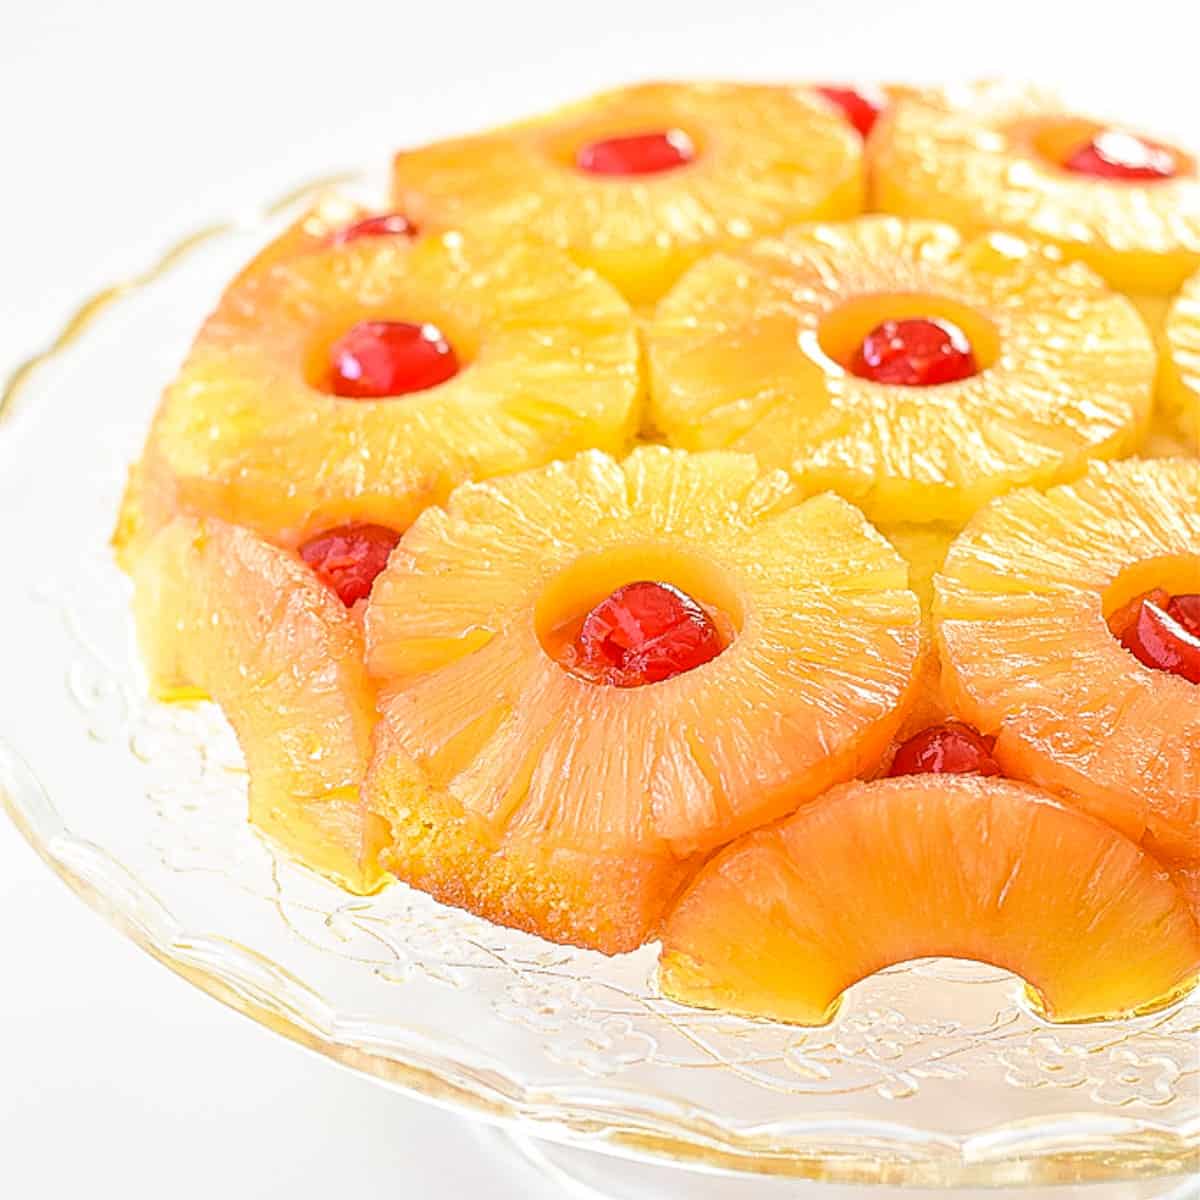 https://www.goodnomshoney.com/wp-content/uploads/2020/10/Low-FODMAP-Pineapple-Upside-Down-Cake-Gluten-Free-Paleo-Option-Featured-1.jpg